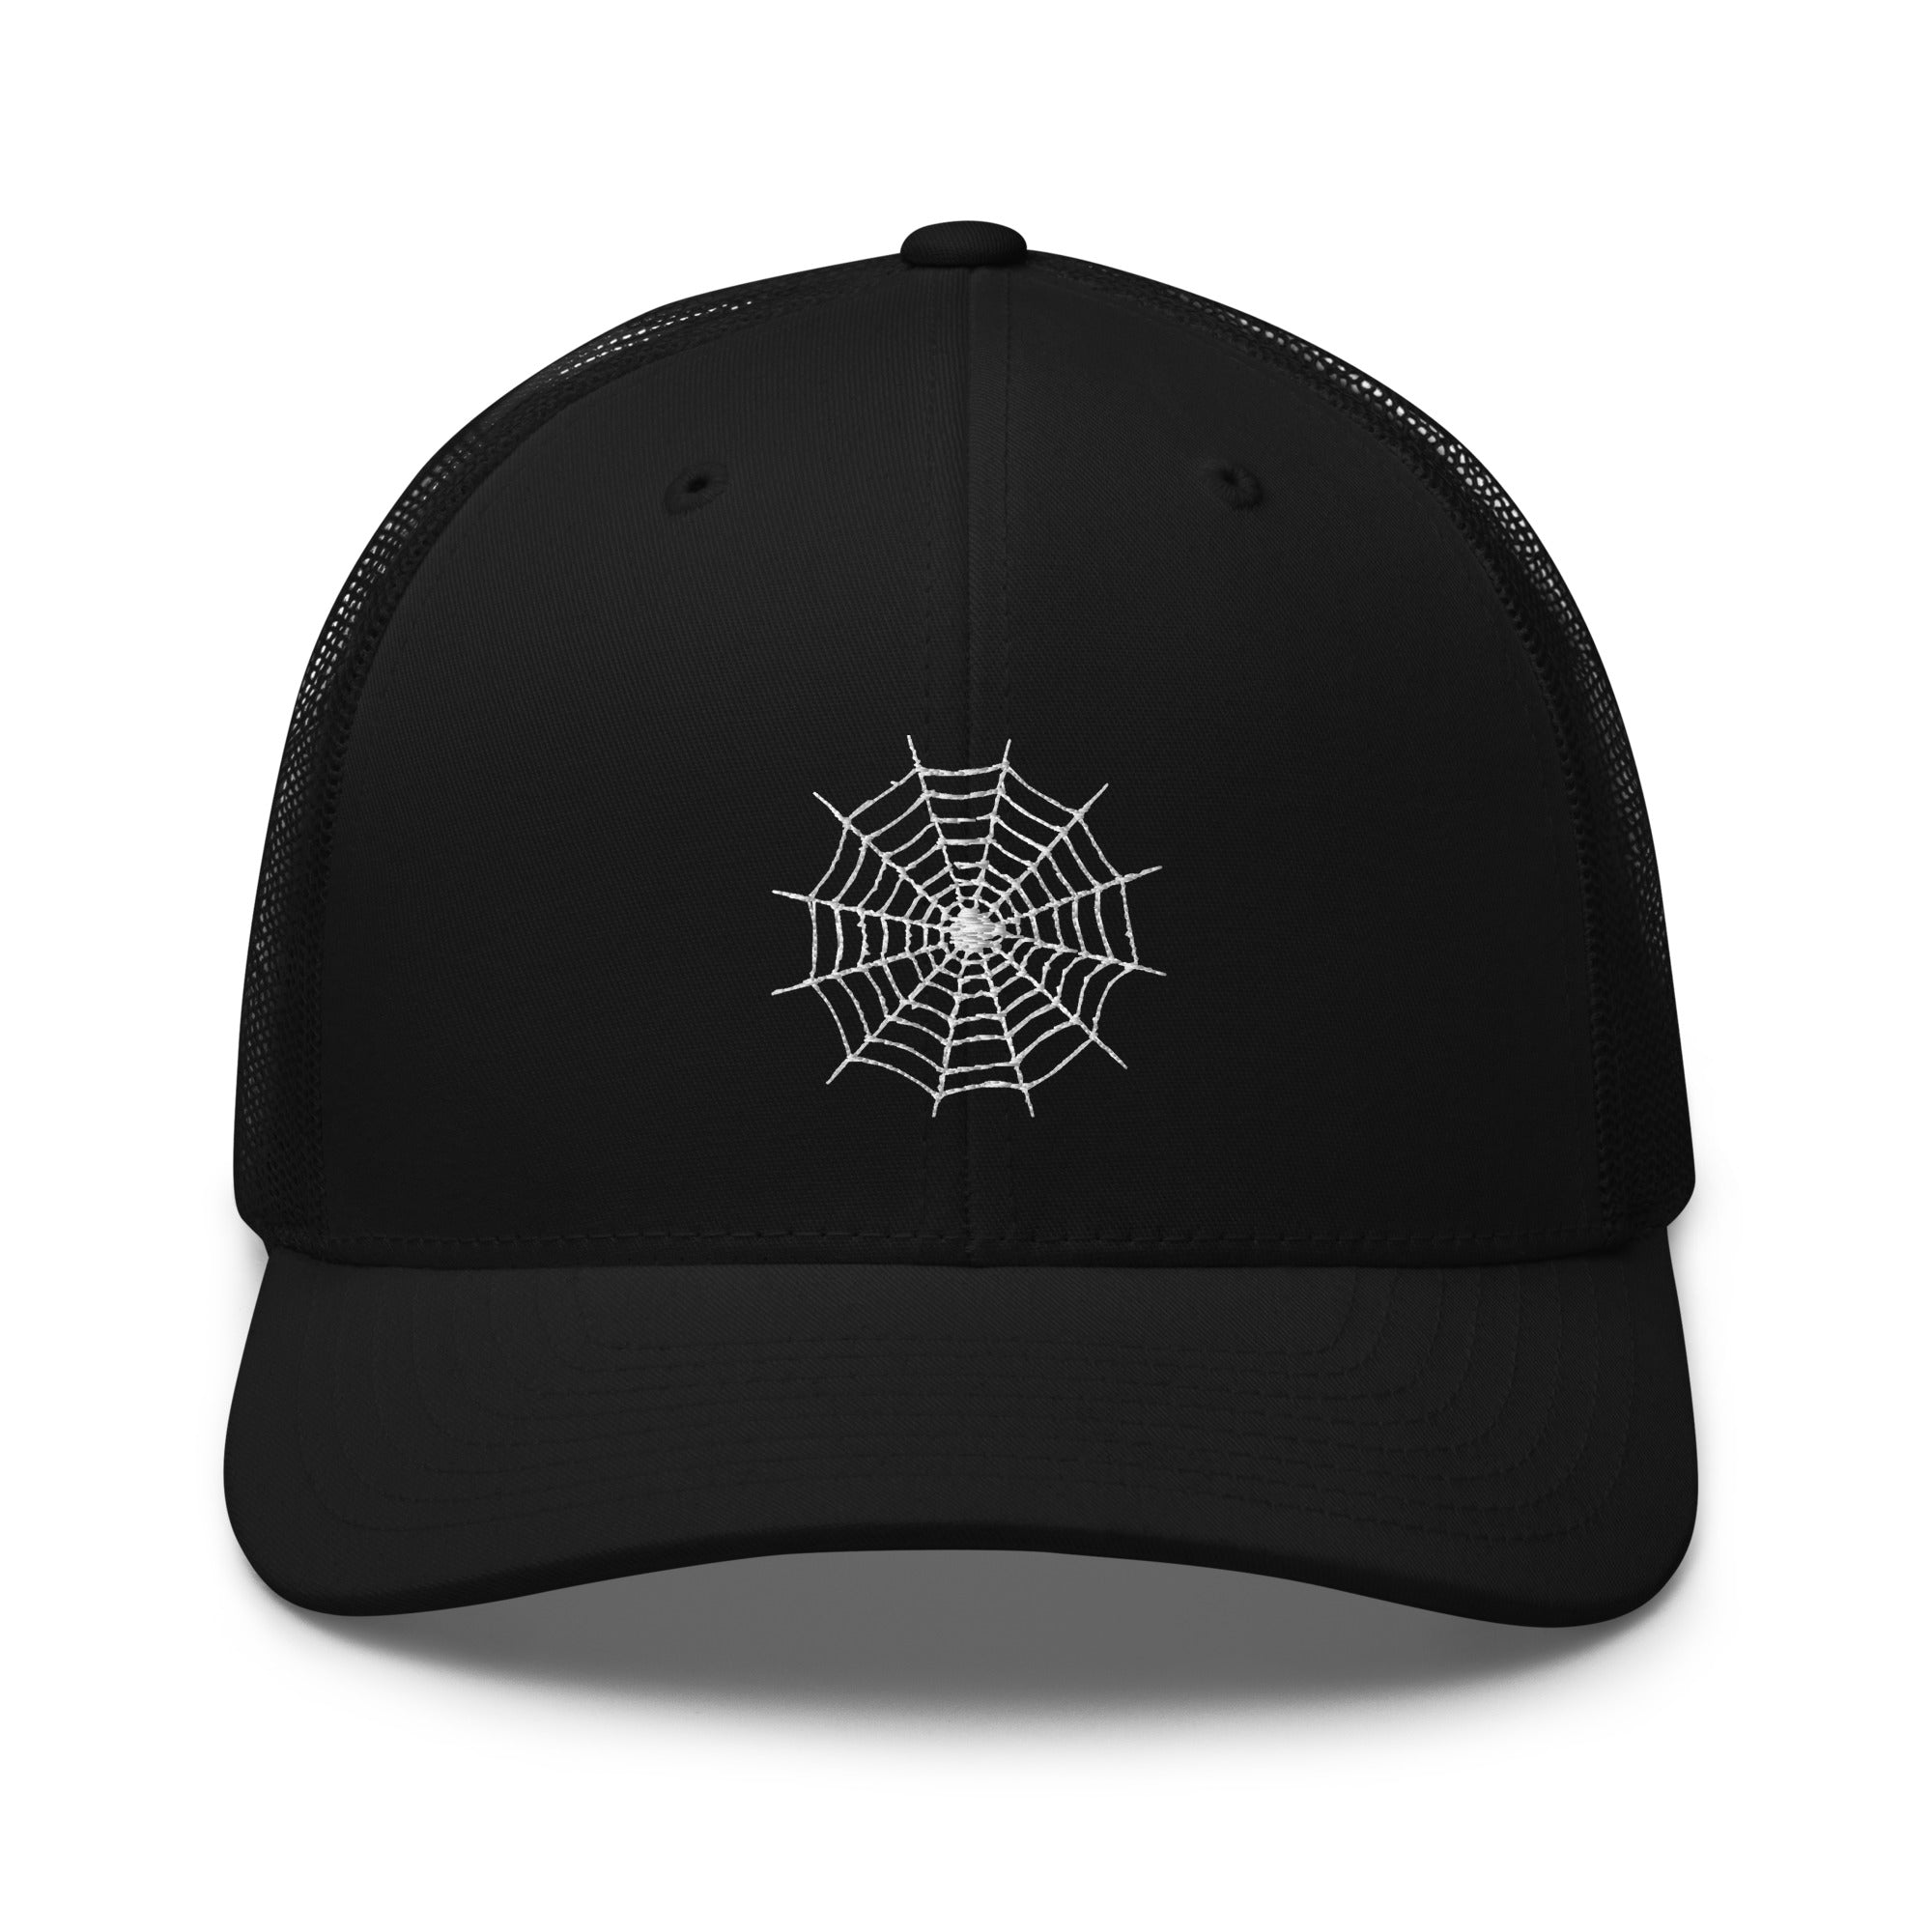 Creepy Spiderweb Halloween Cobweb Embroidered Trucker Cap Snapback Hat